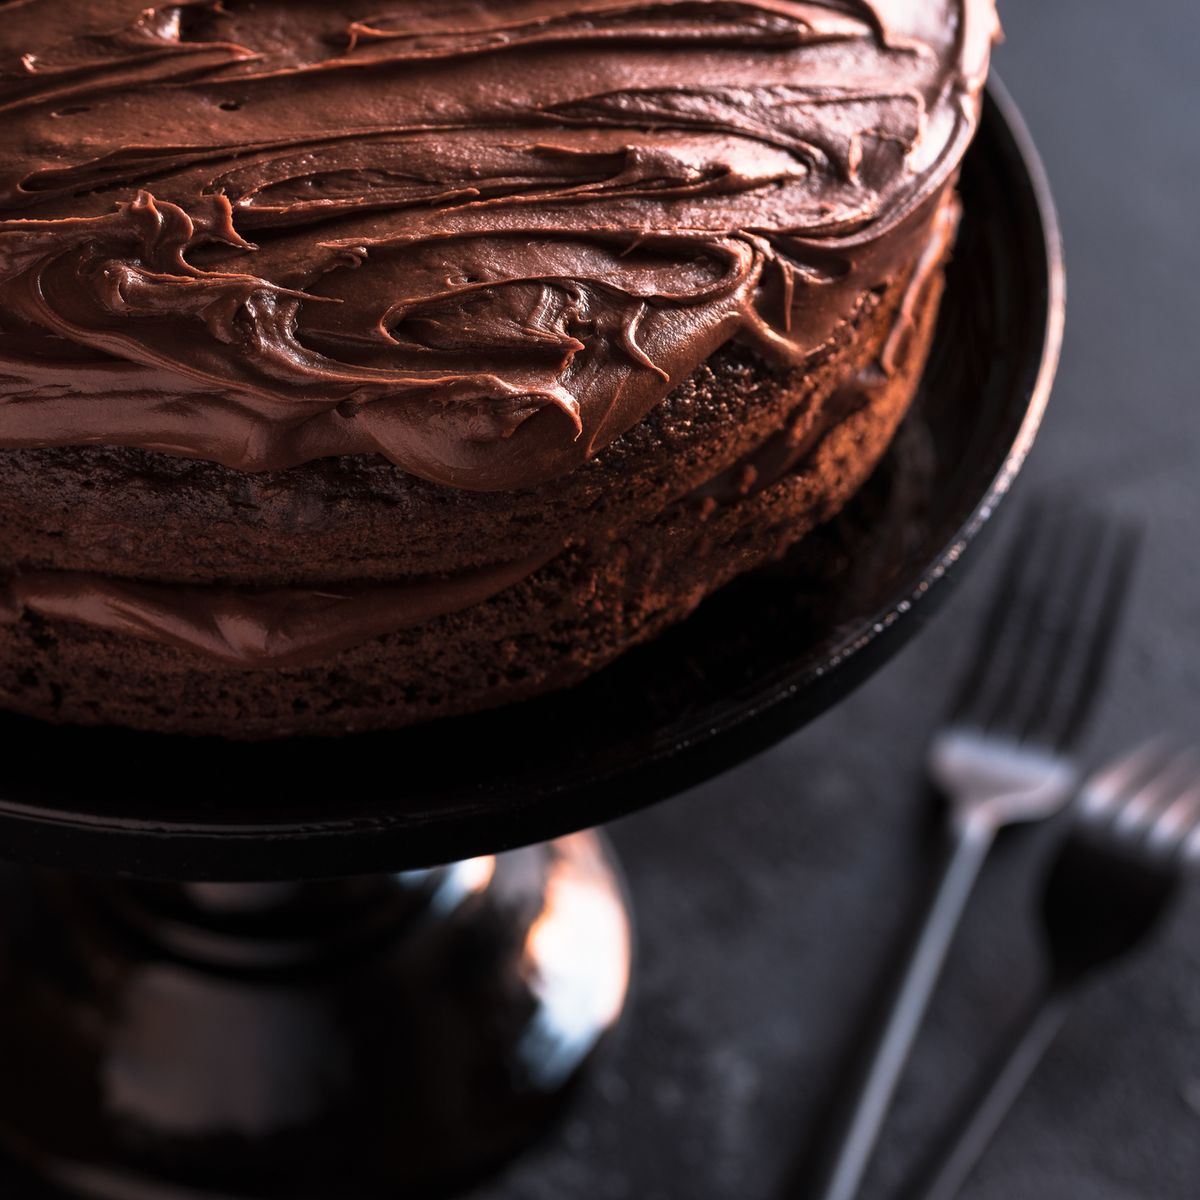 Mary Berry Very Best Chocolate Cake | Dessert recipes